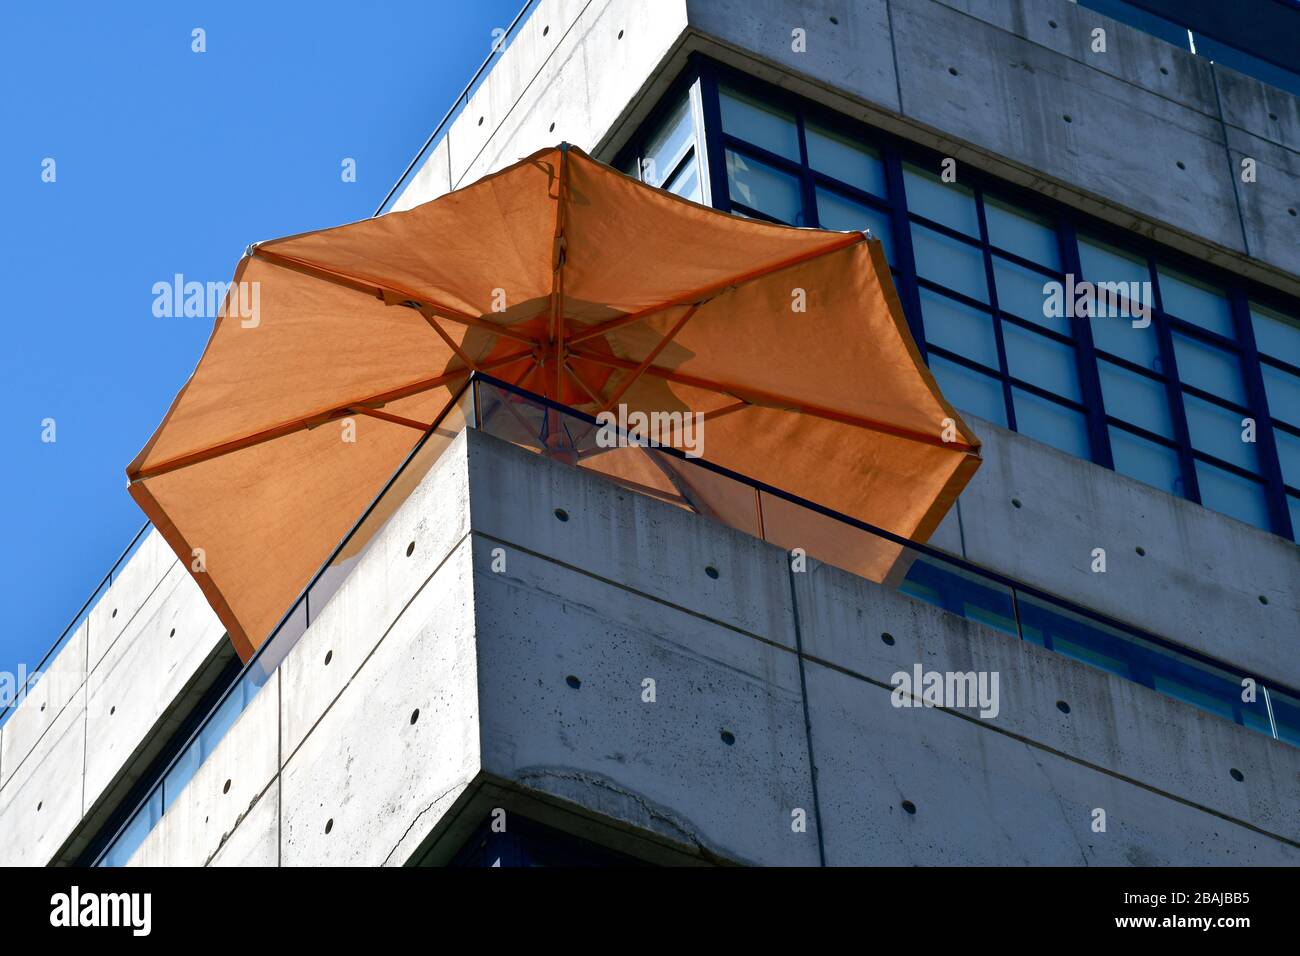 Low angle view of a corner section of a minimalistic grey concrete building with a bright orange sun umbrella stick Stock Photo